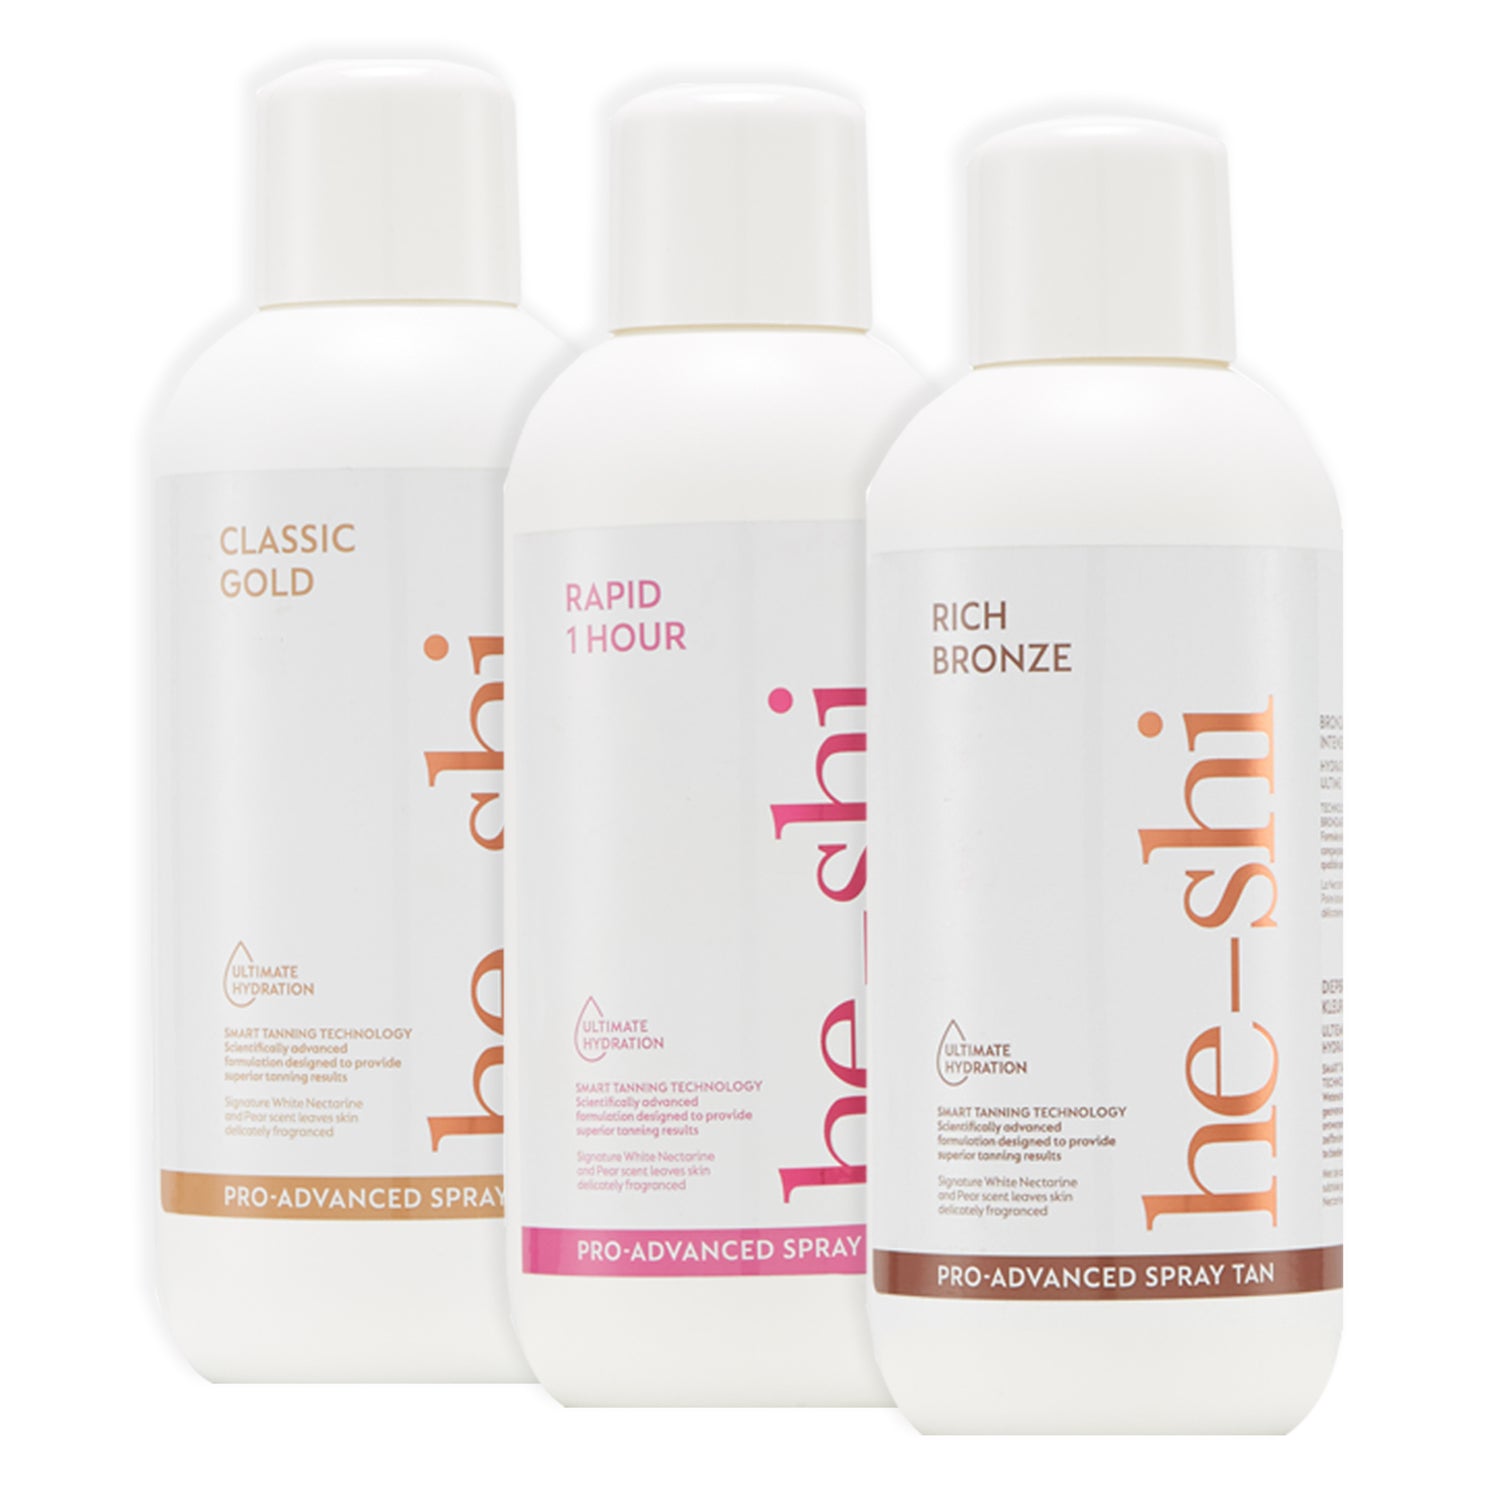 range of He-Shi spray tan products